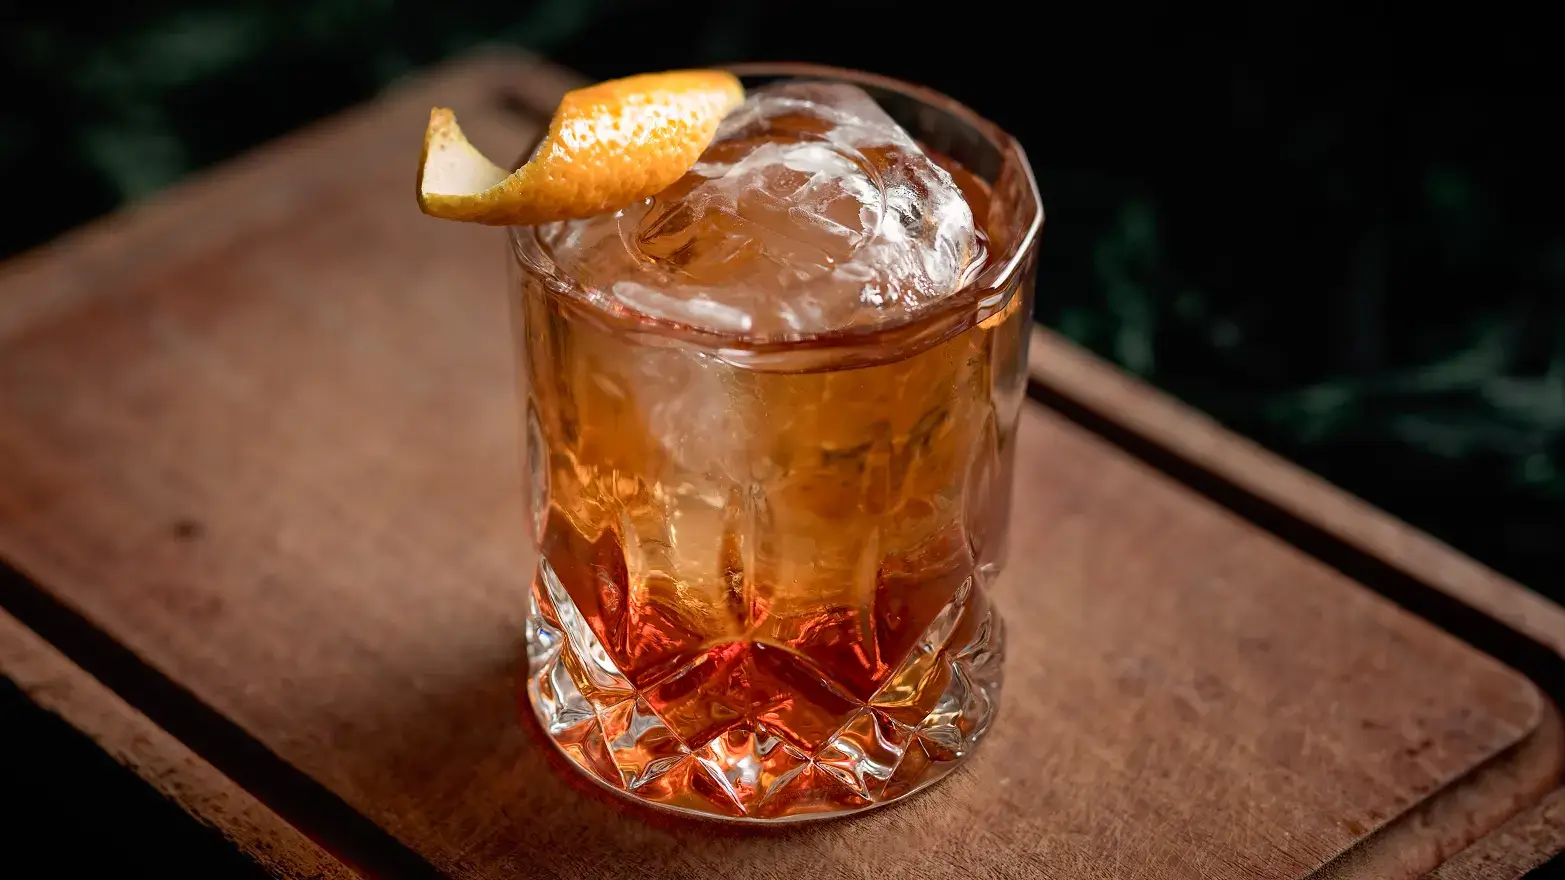 Old smokeshow whiskey cocktail